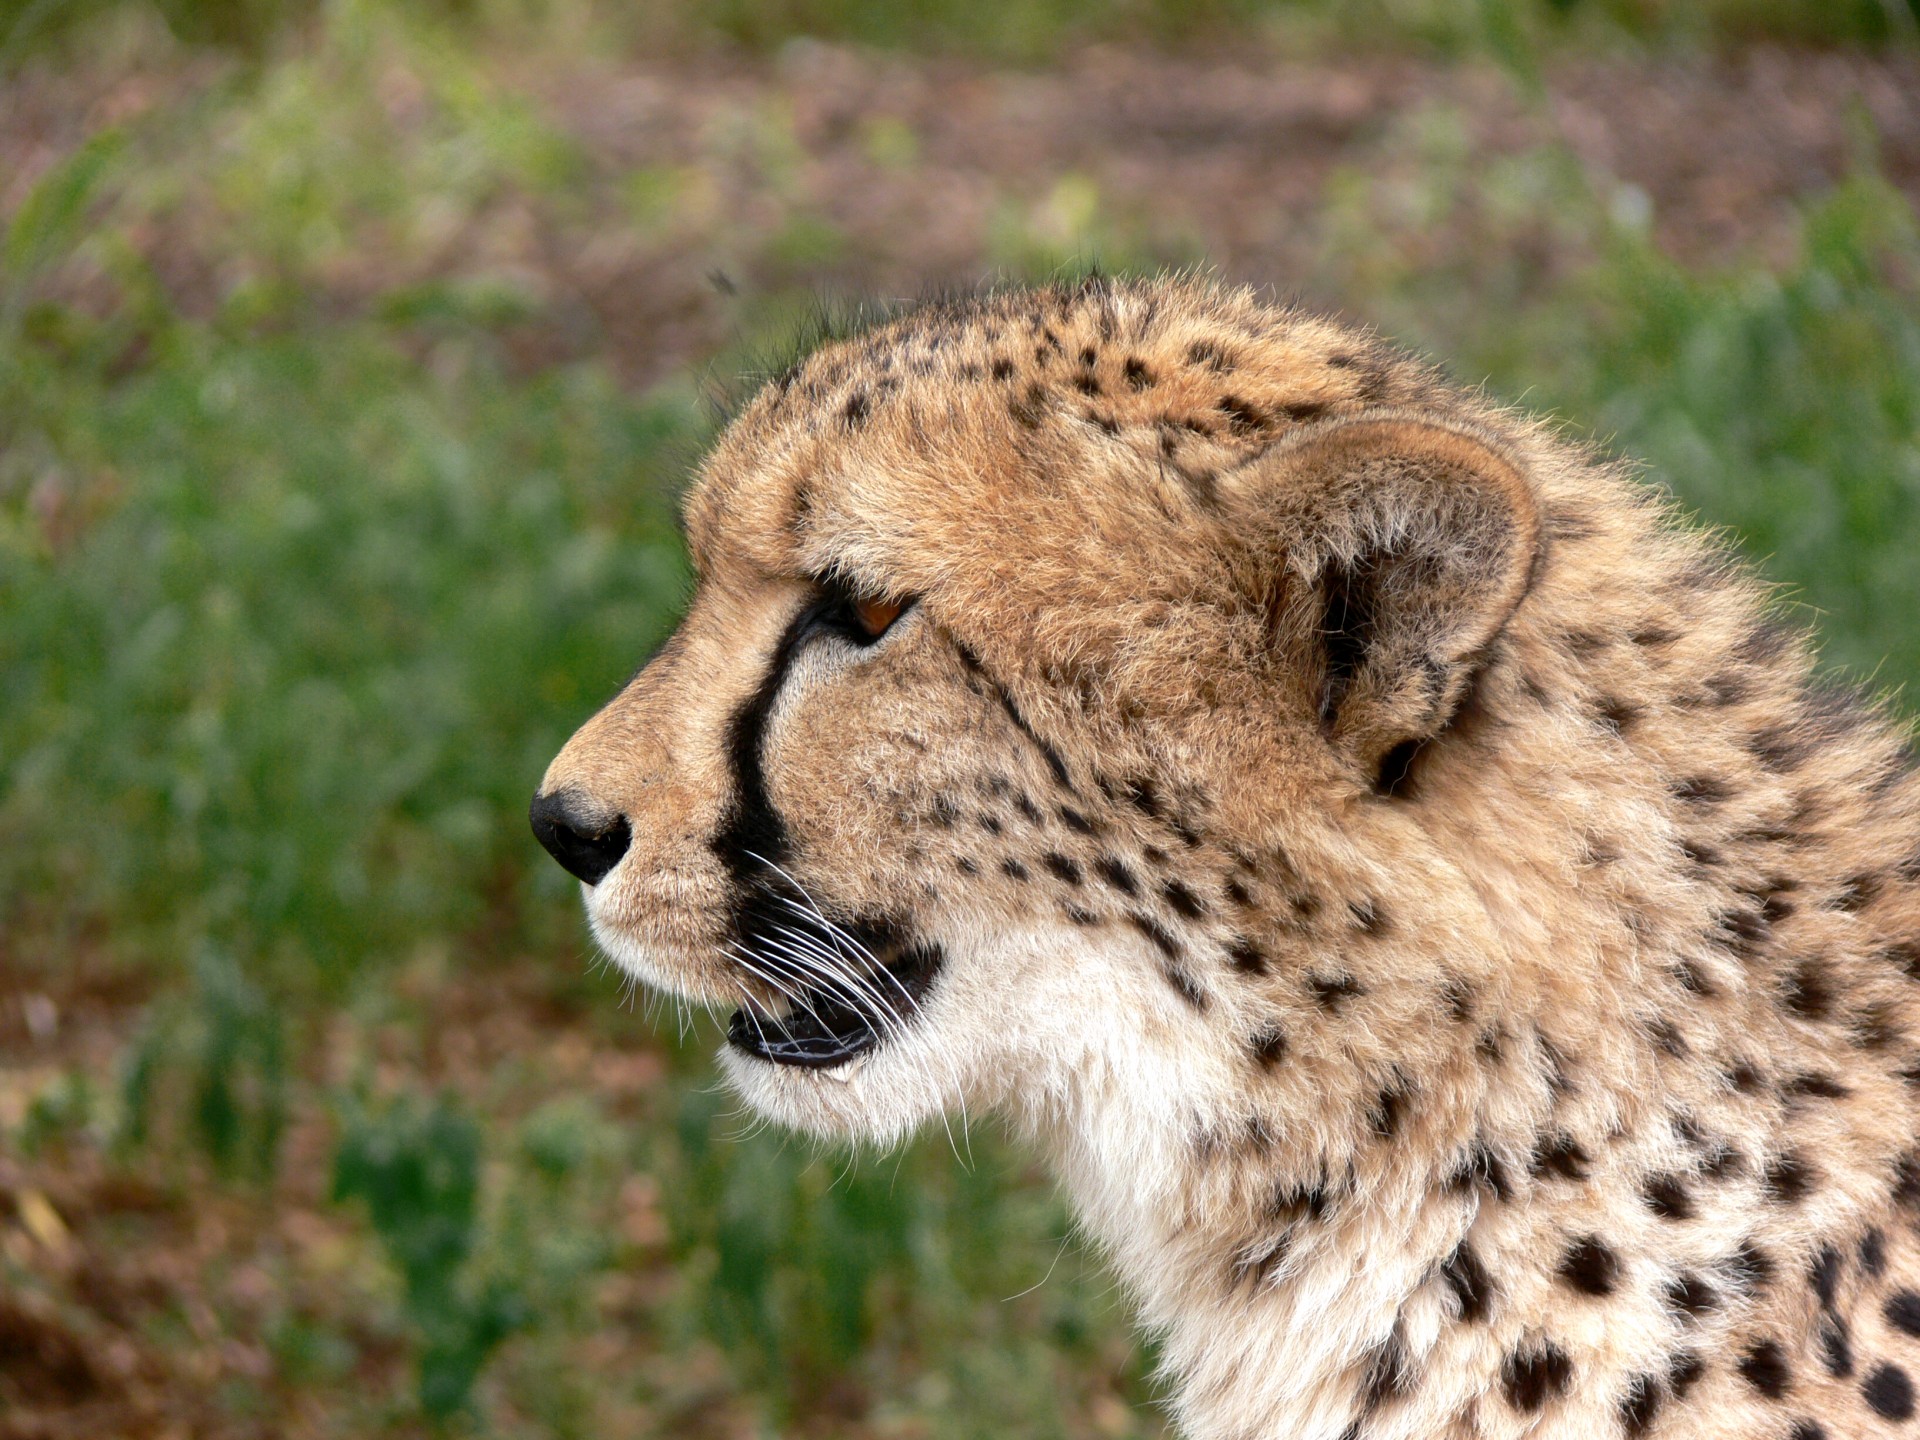 Cheetah In Profile